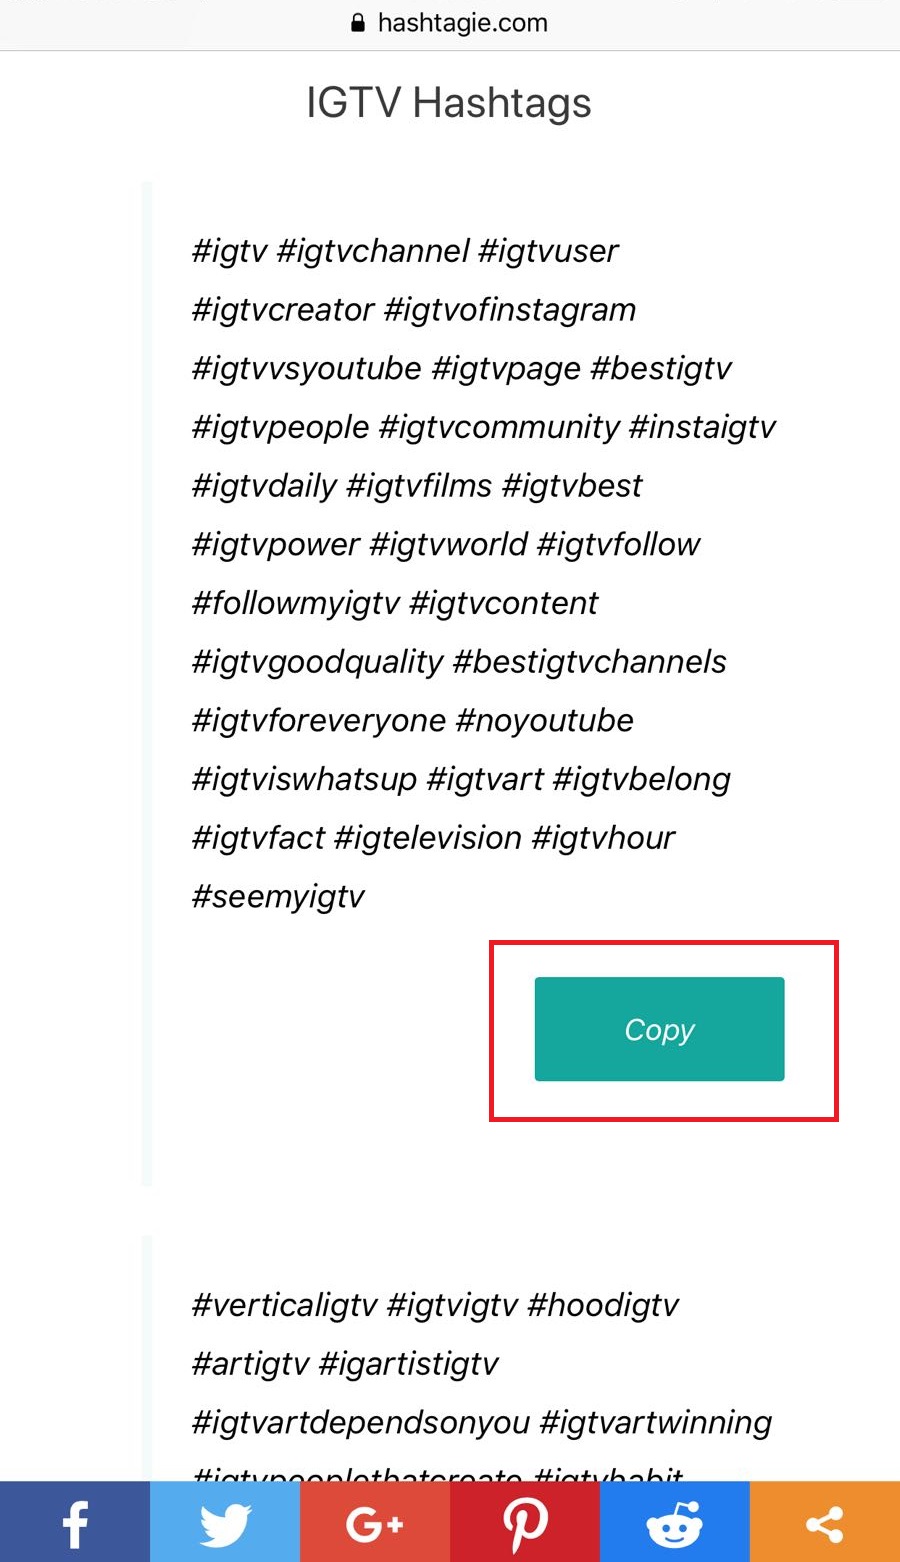 igtv hashtags limit 18